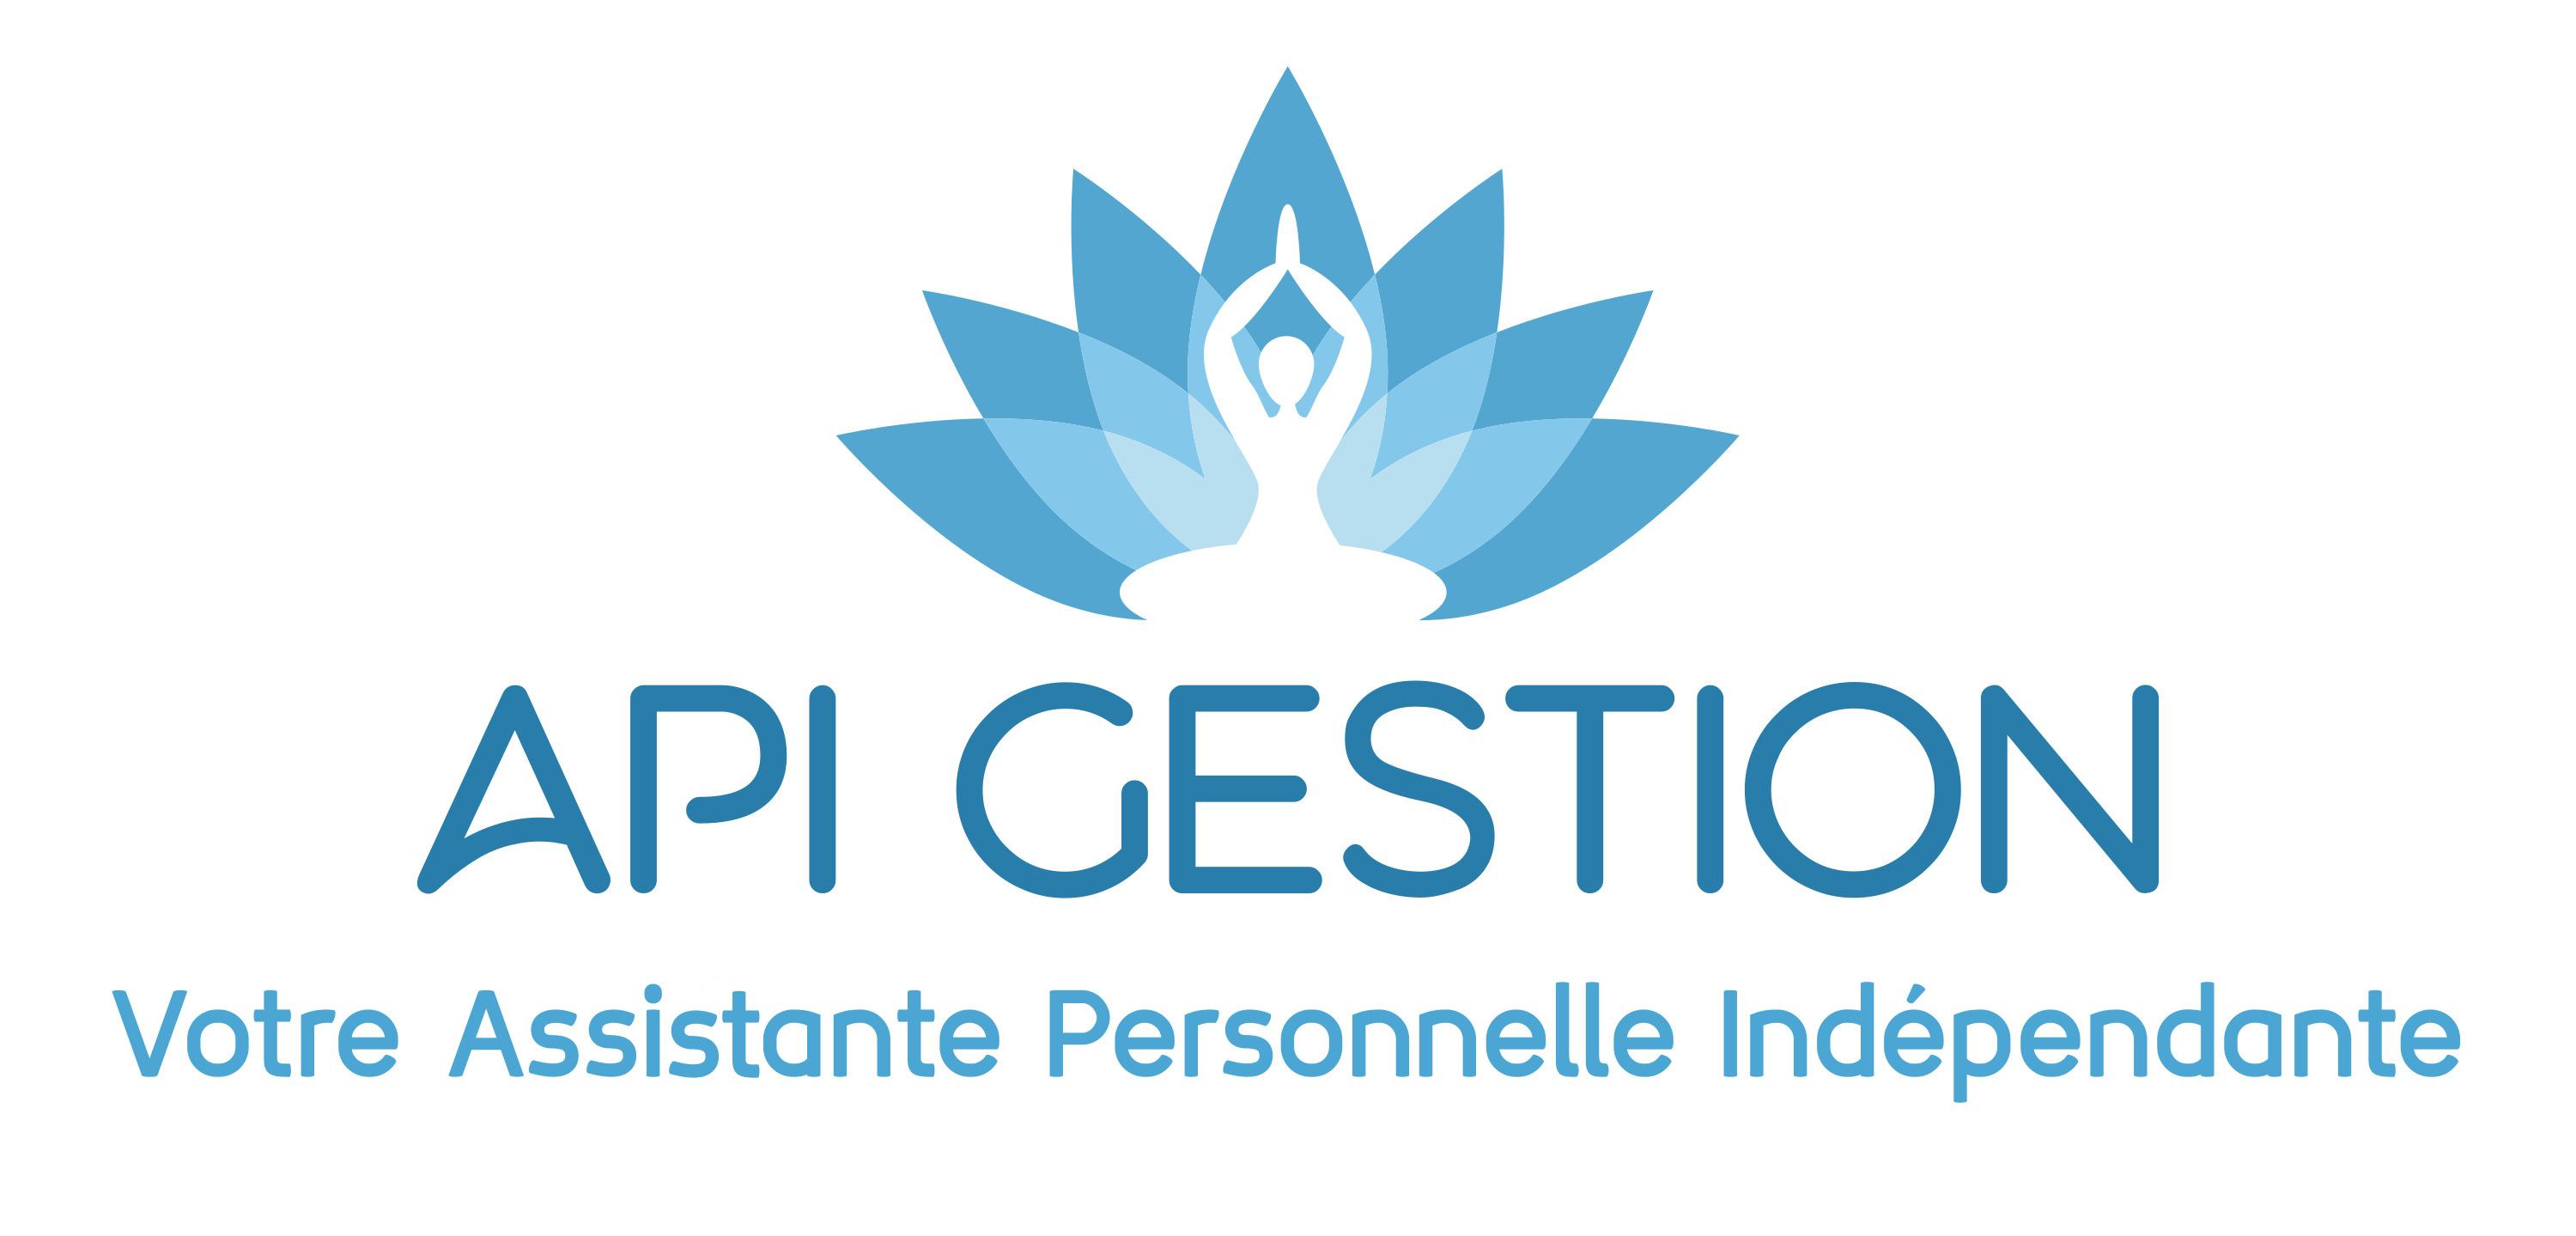 API GESTION Logo